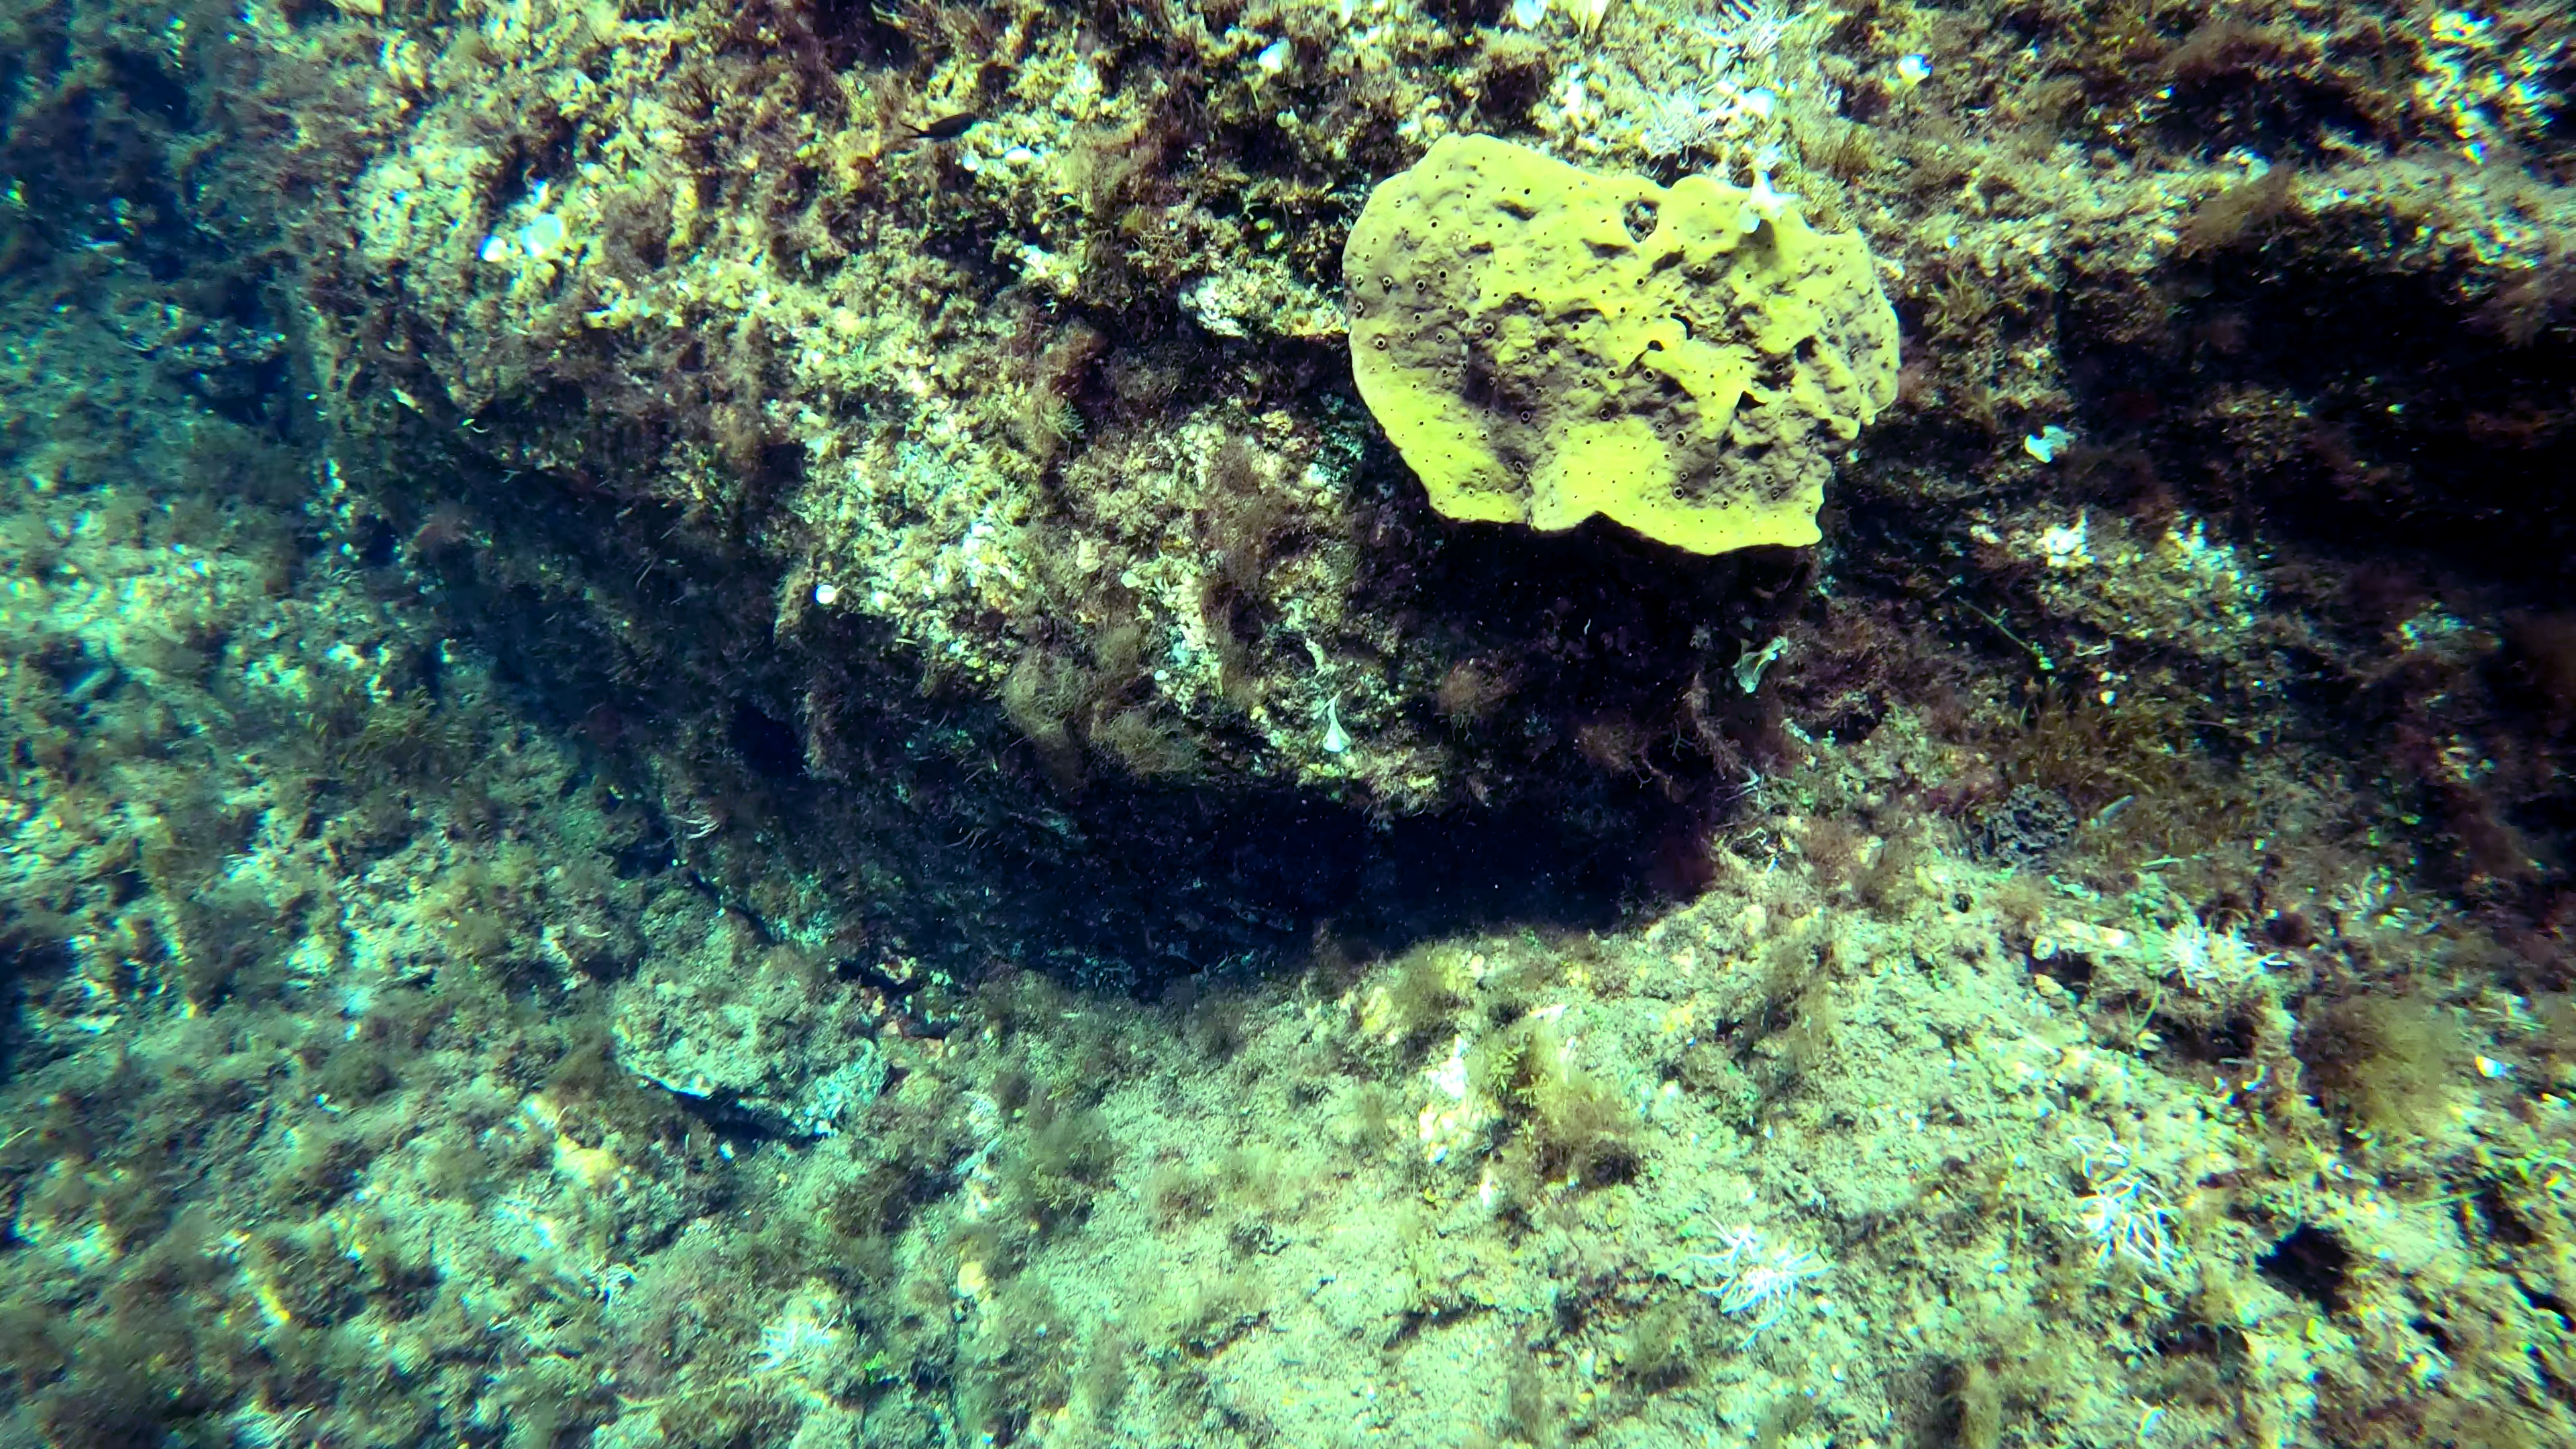 Spugna cornea Demosponge Porifera Demospongiae www.intotheblue.it